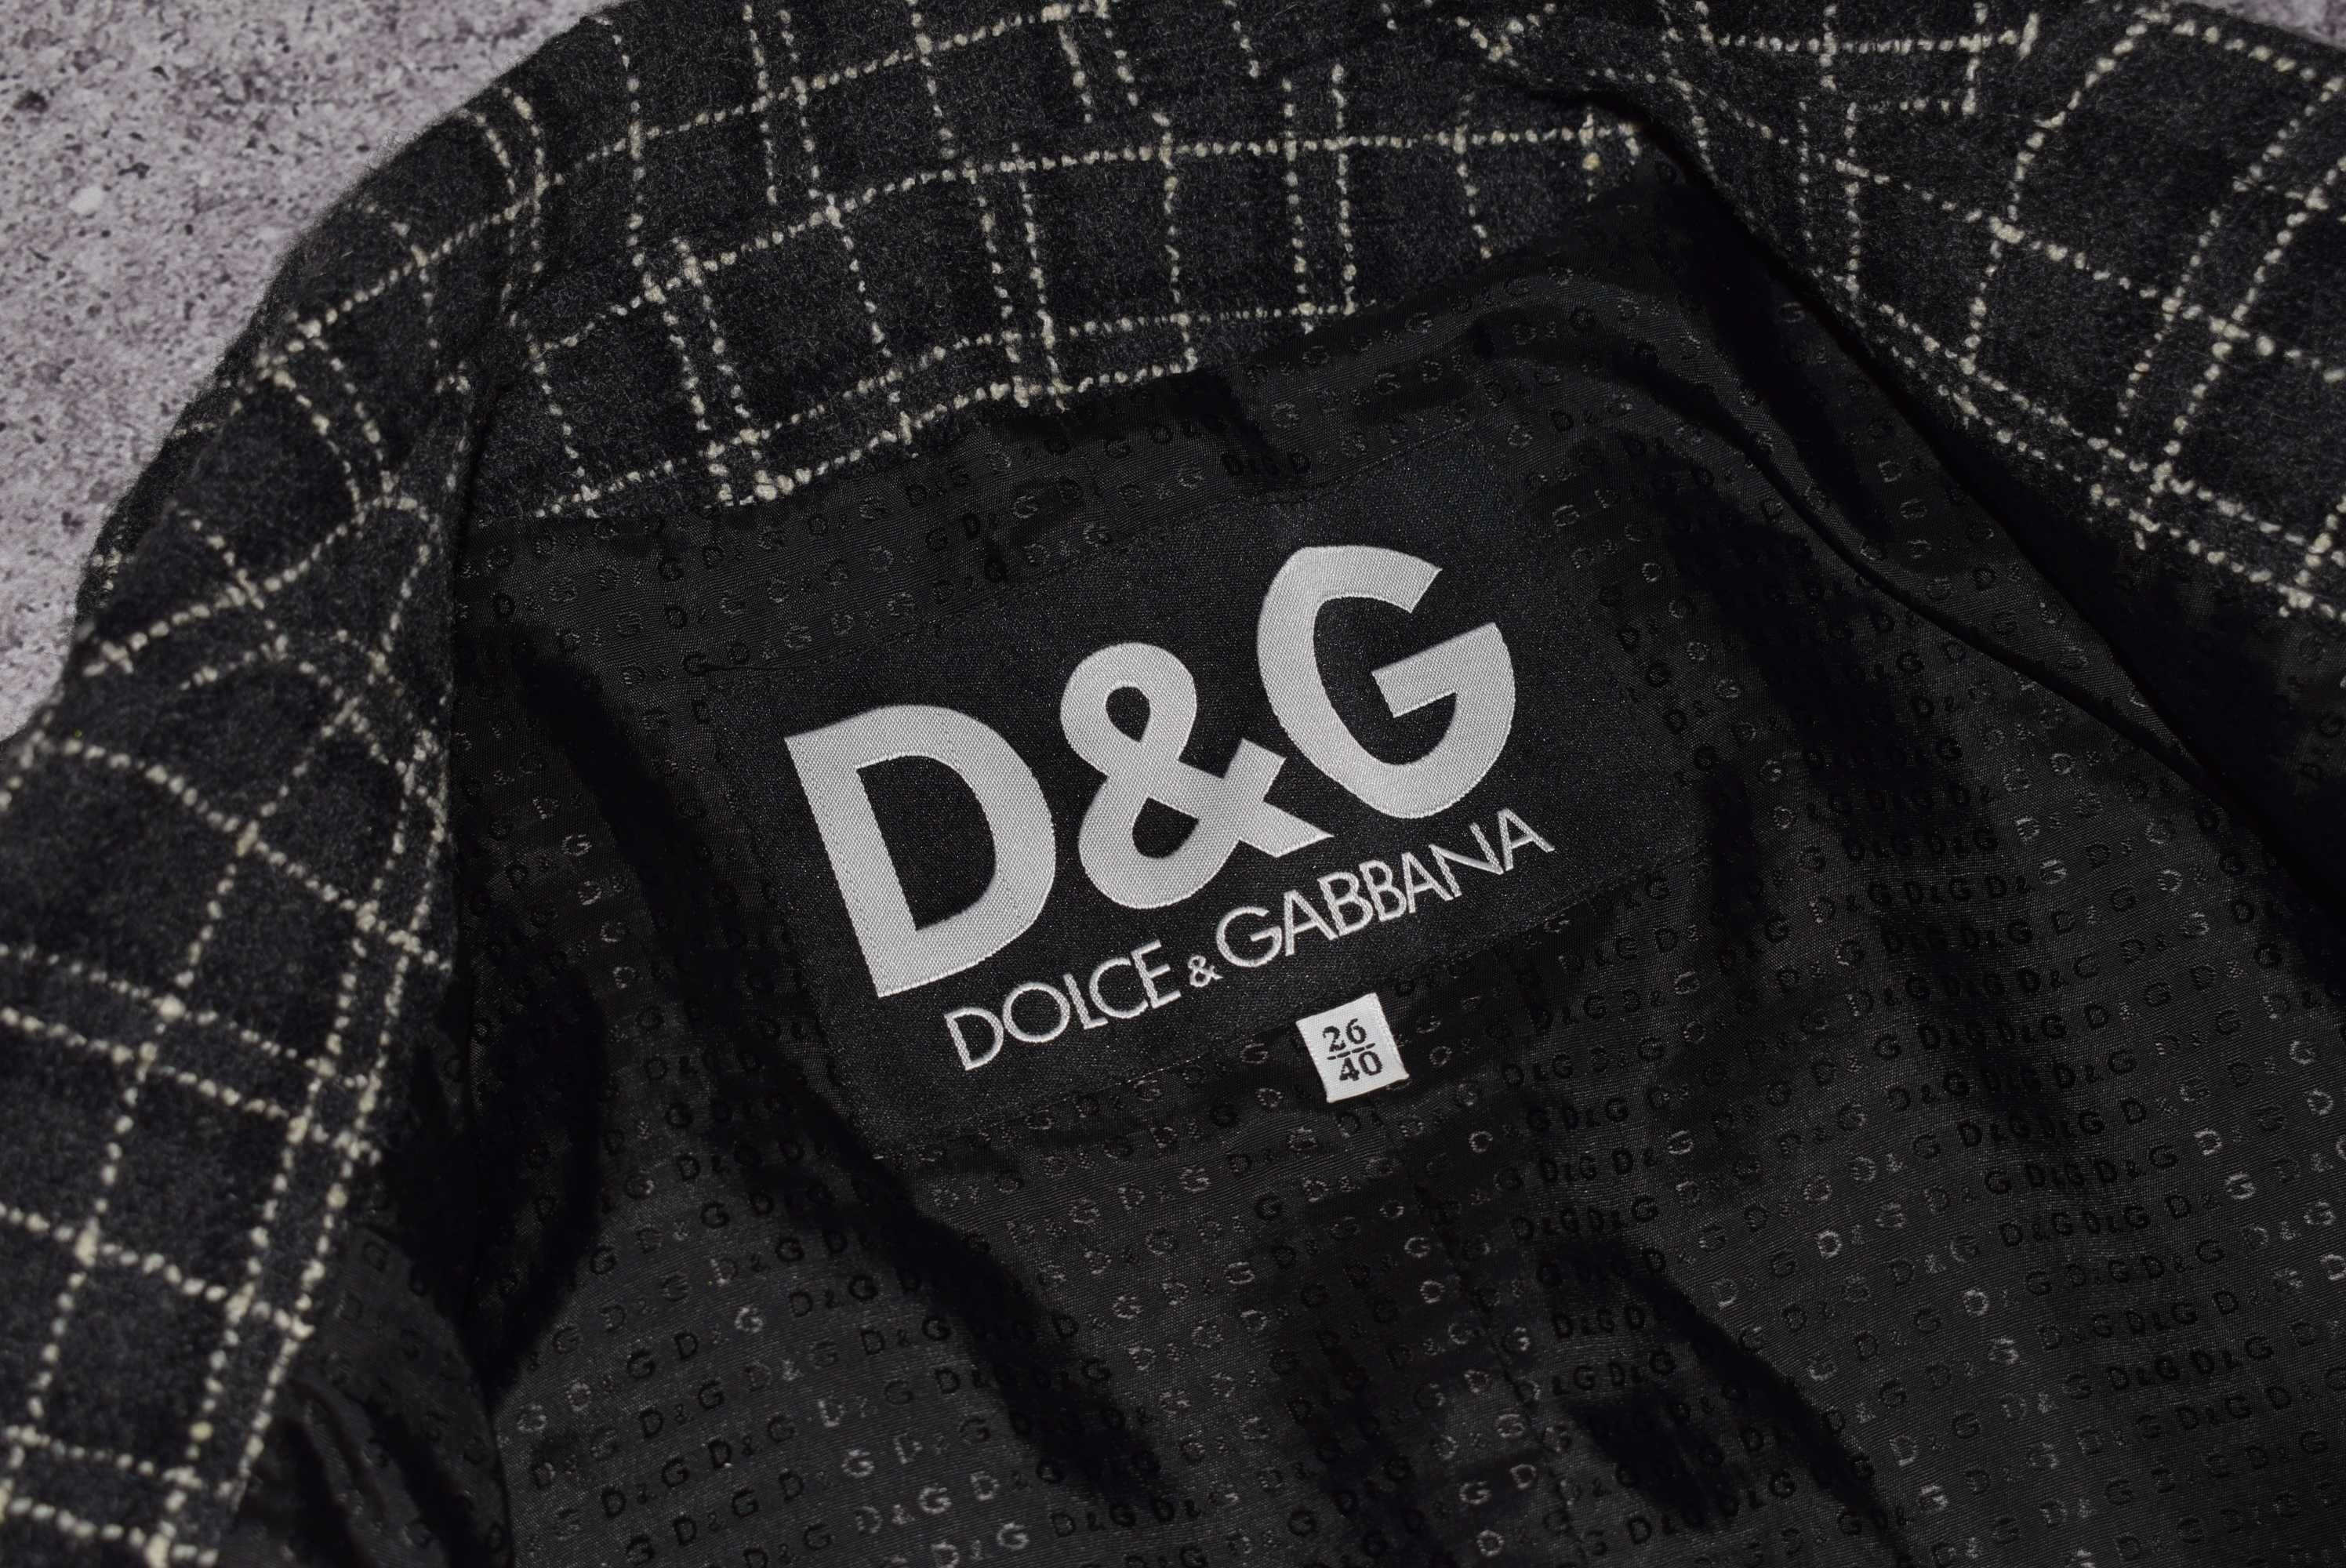 Dolce Gabbana Vintage Blazer (Женский Премиальный Пиджак Винтаж D&G )